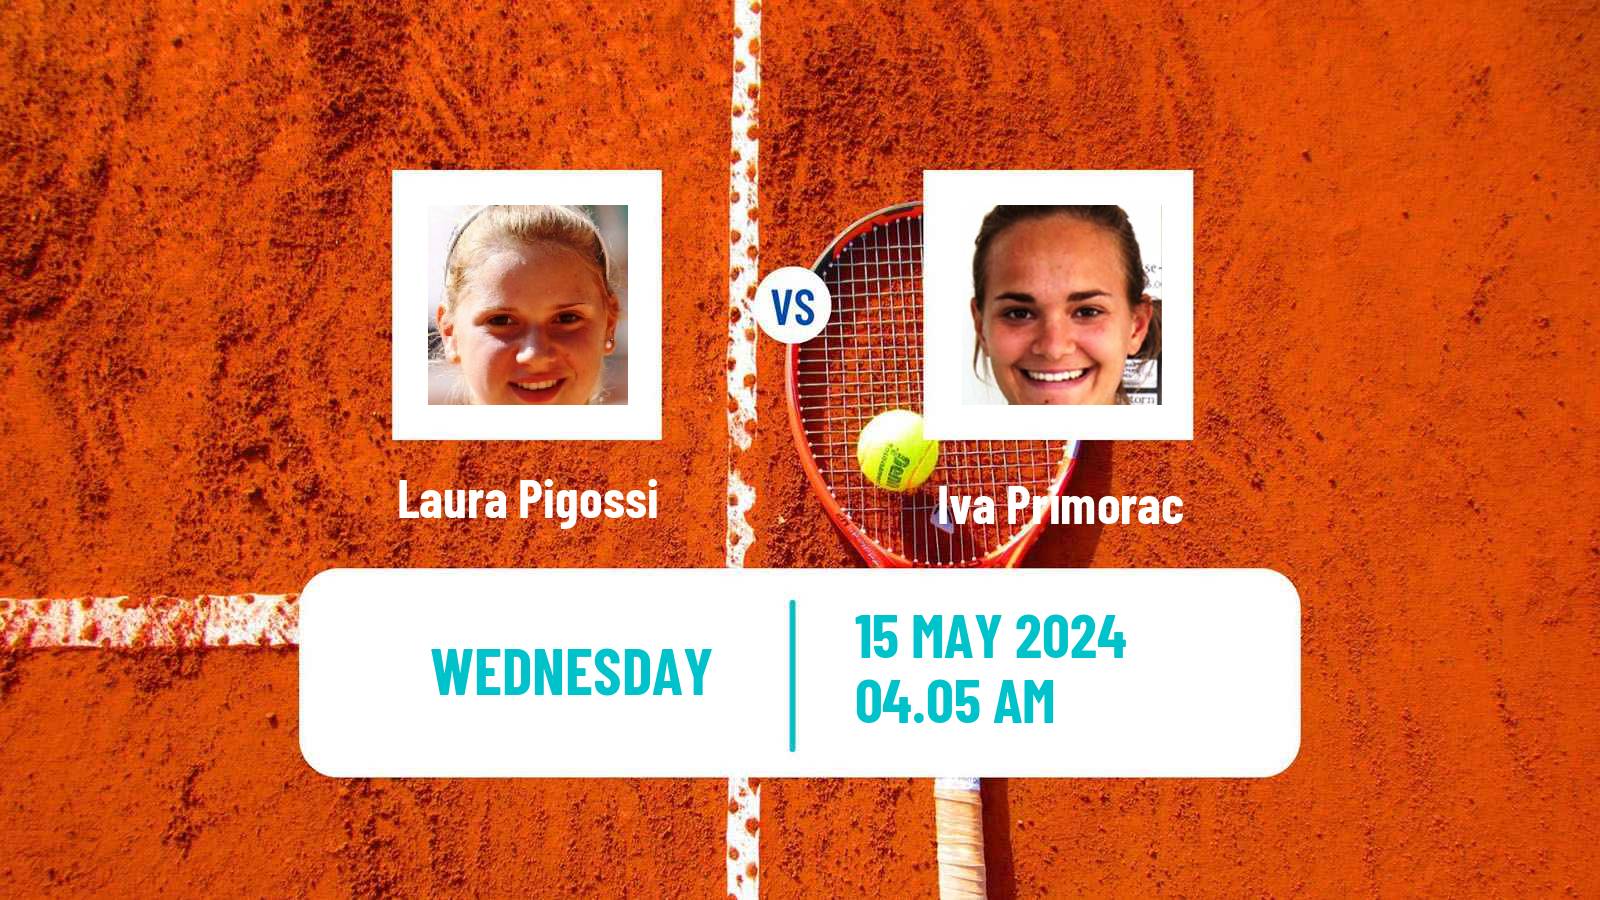 Tennis ITF W75 Zagreb Women Laura Pigossi - Iva Primorac